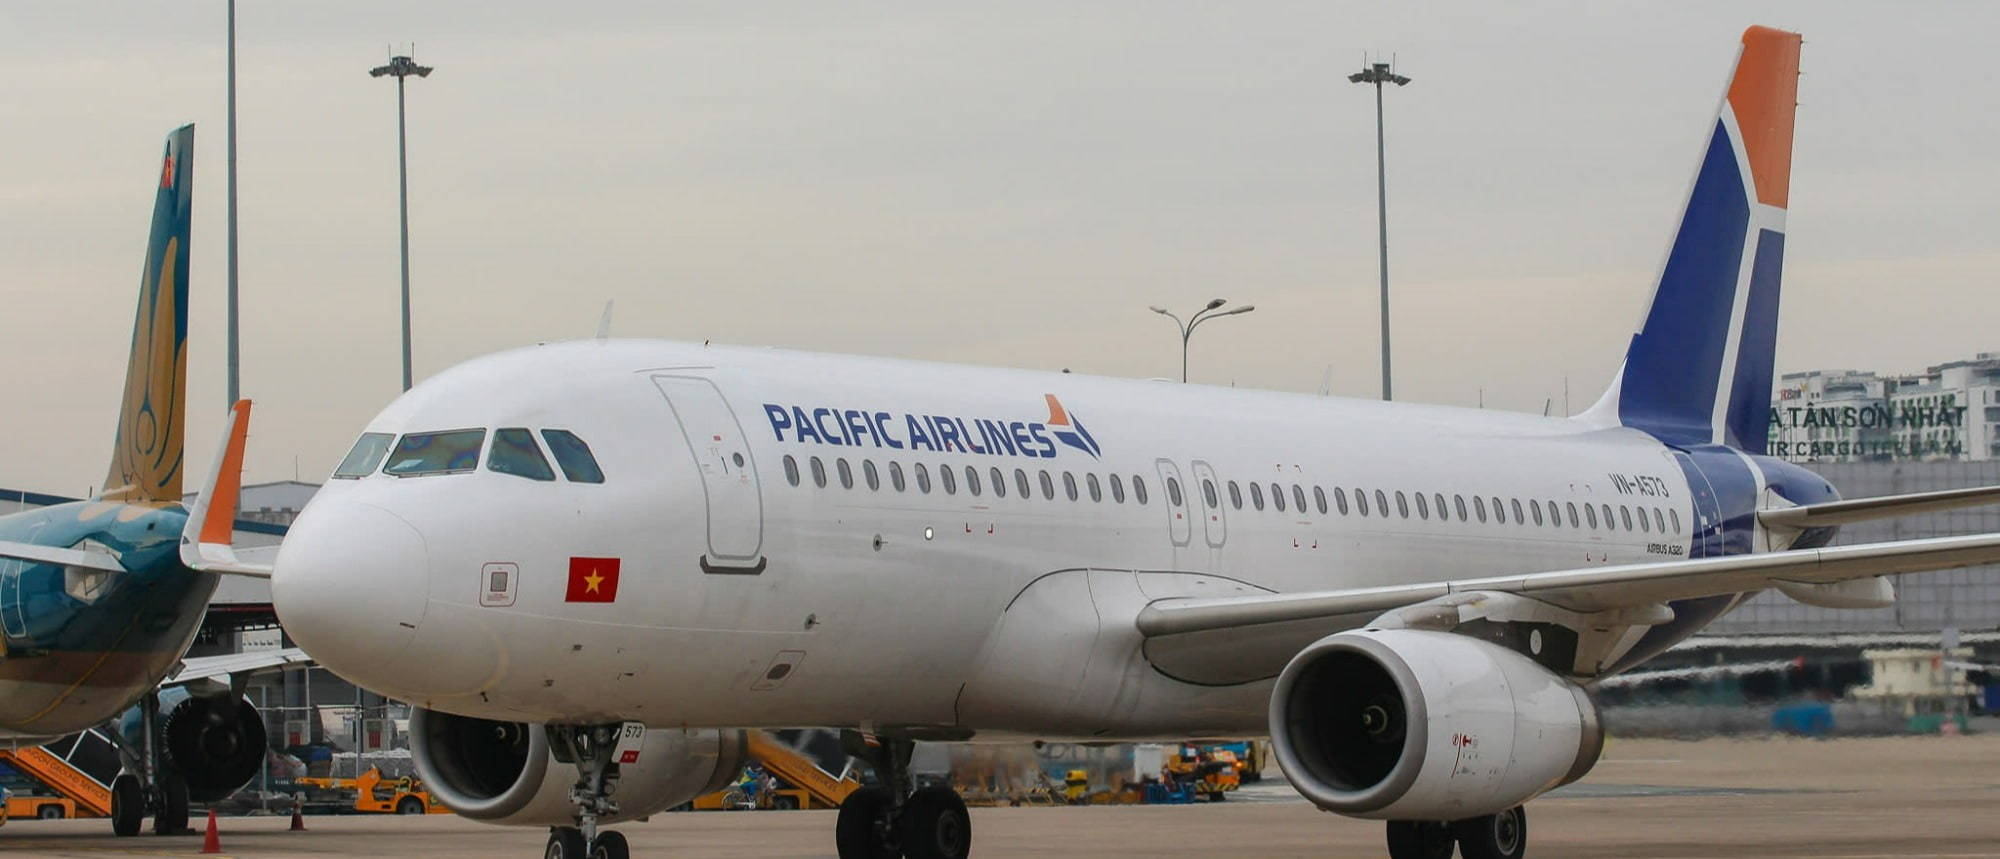 Pacific Airlines Jobs | Rishworth Aviation | Plane on tarmac